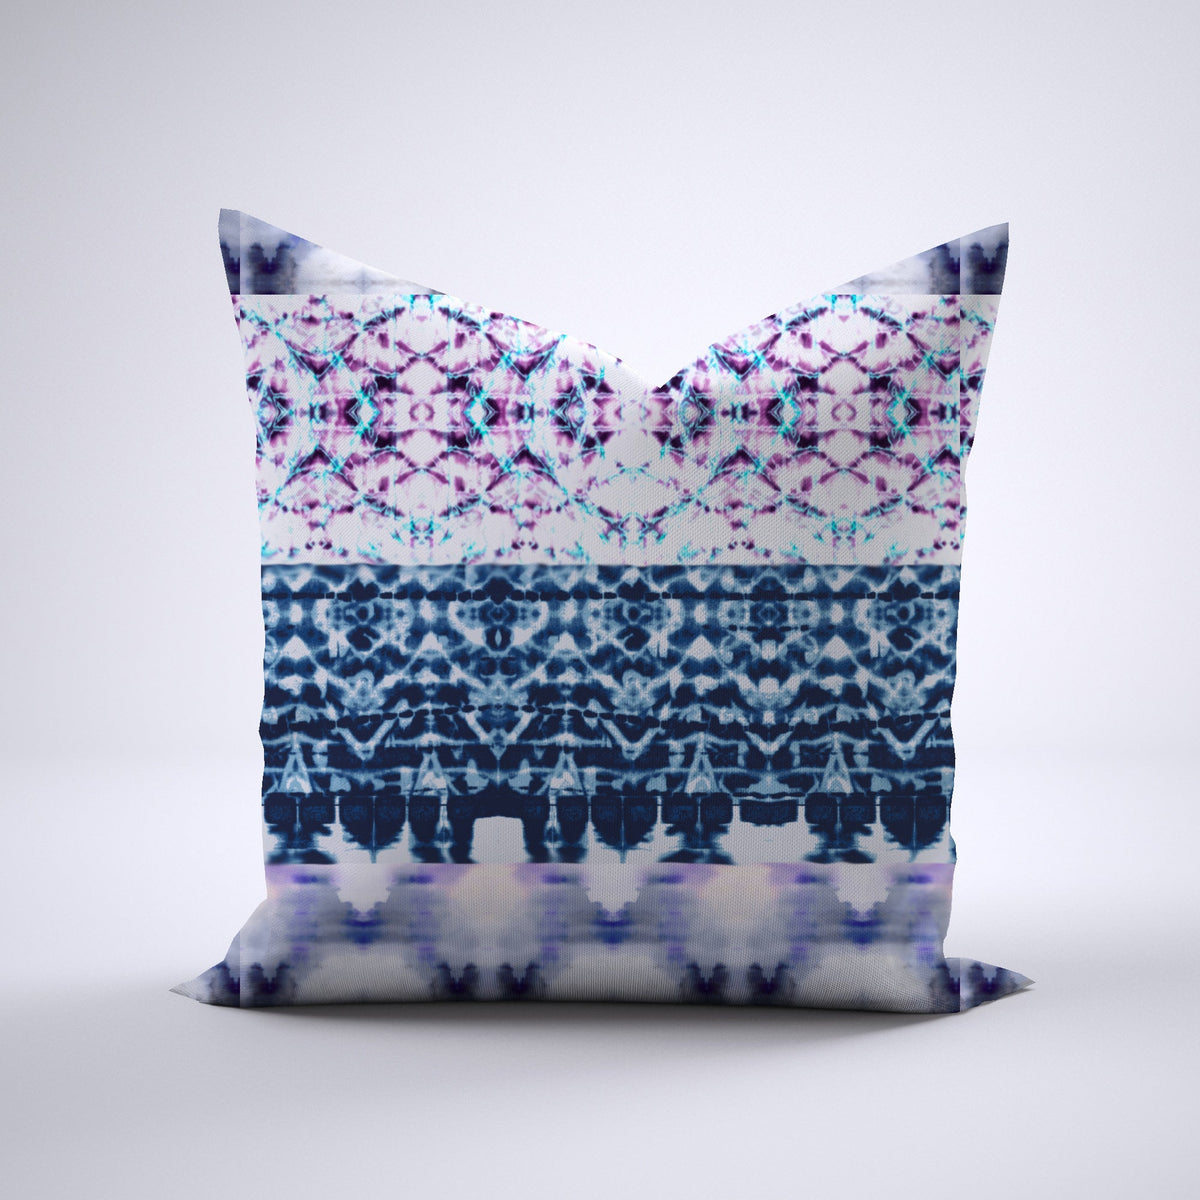 Throw Pillow - Yoshi Lavender Bedding Collections, Pillows, Throw Pillows MWW 